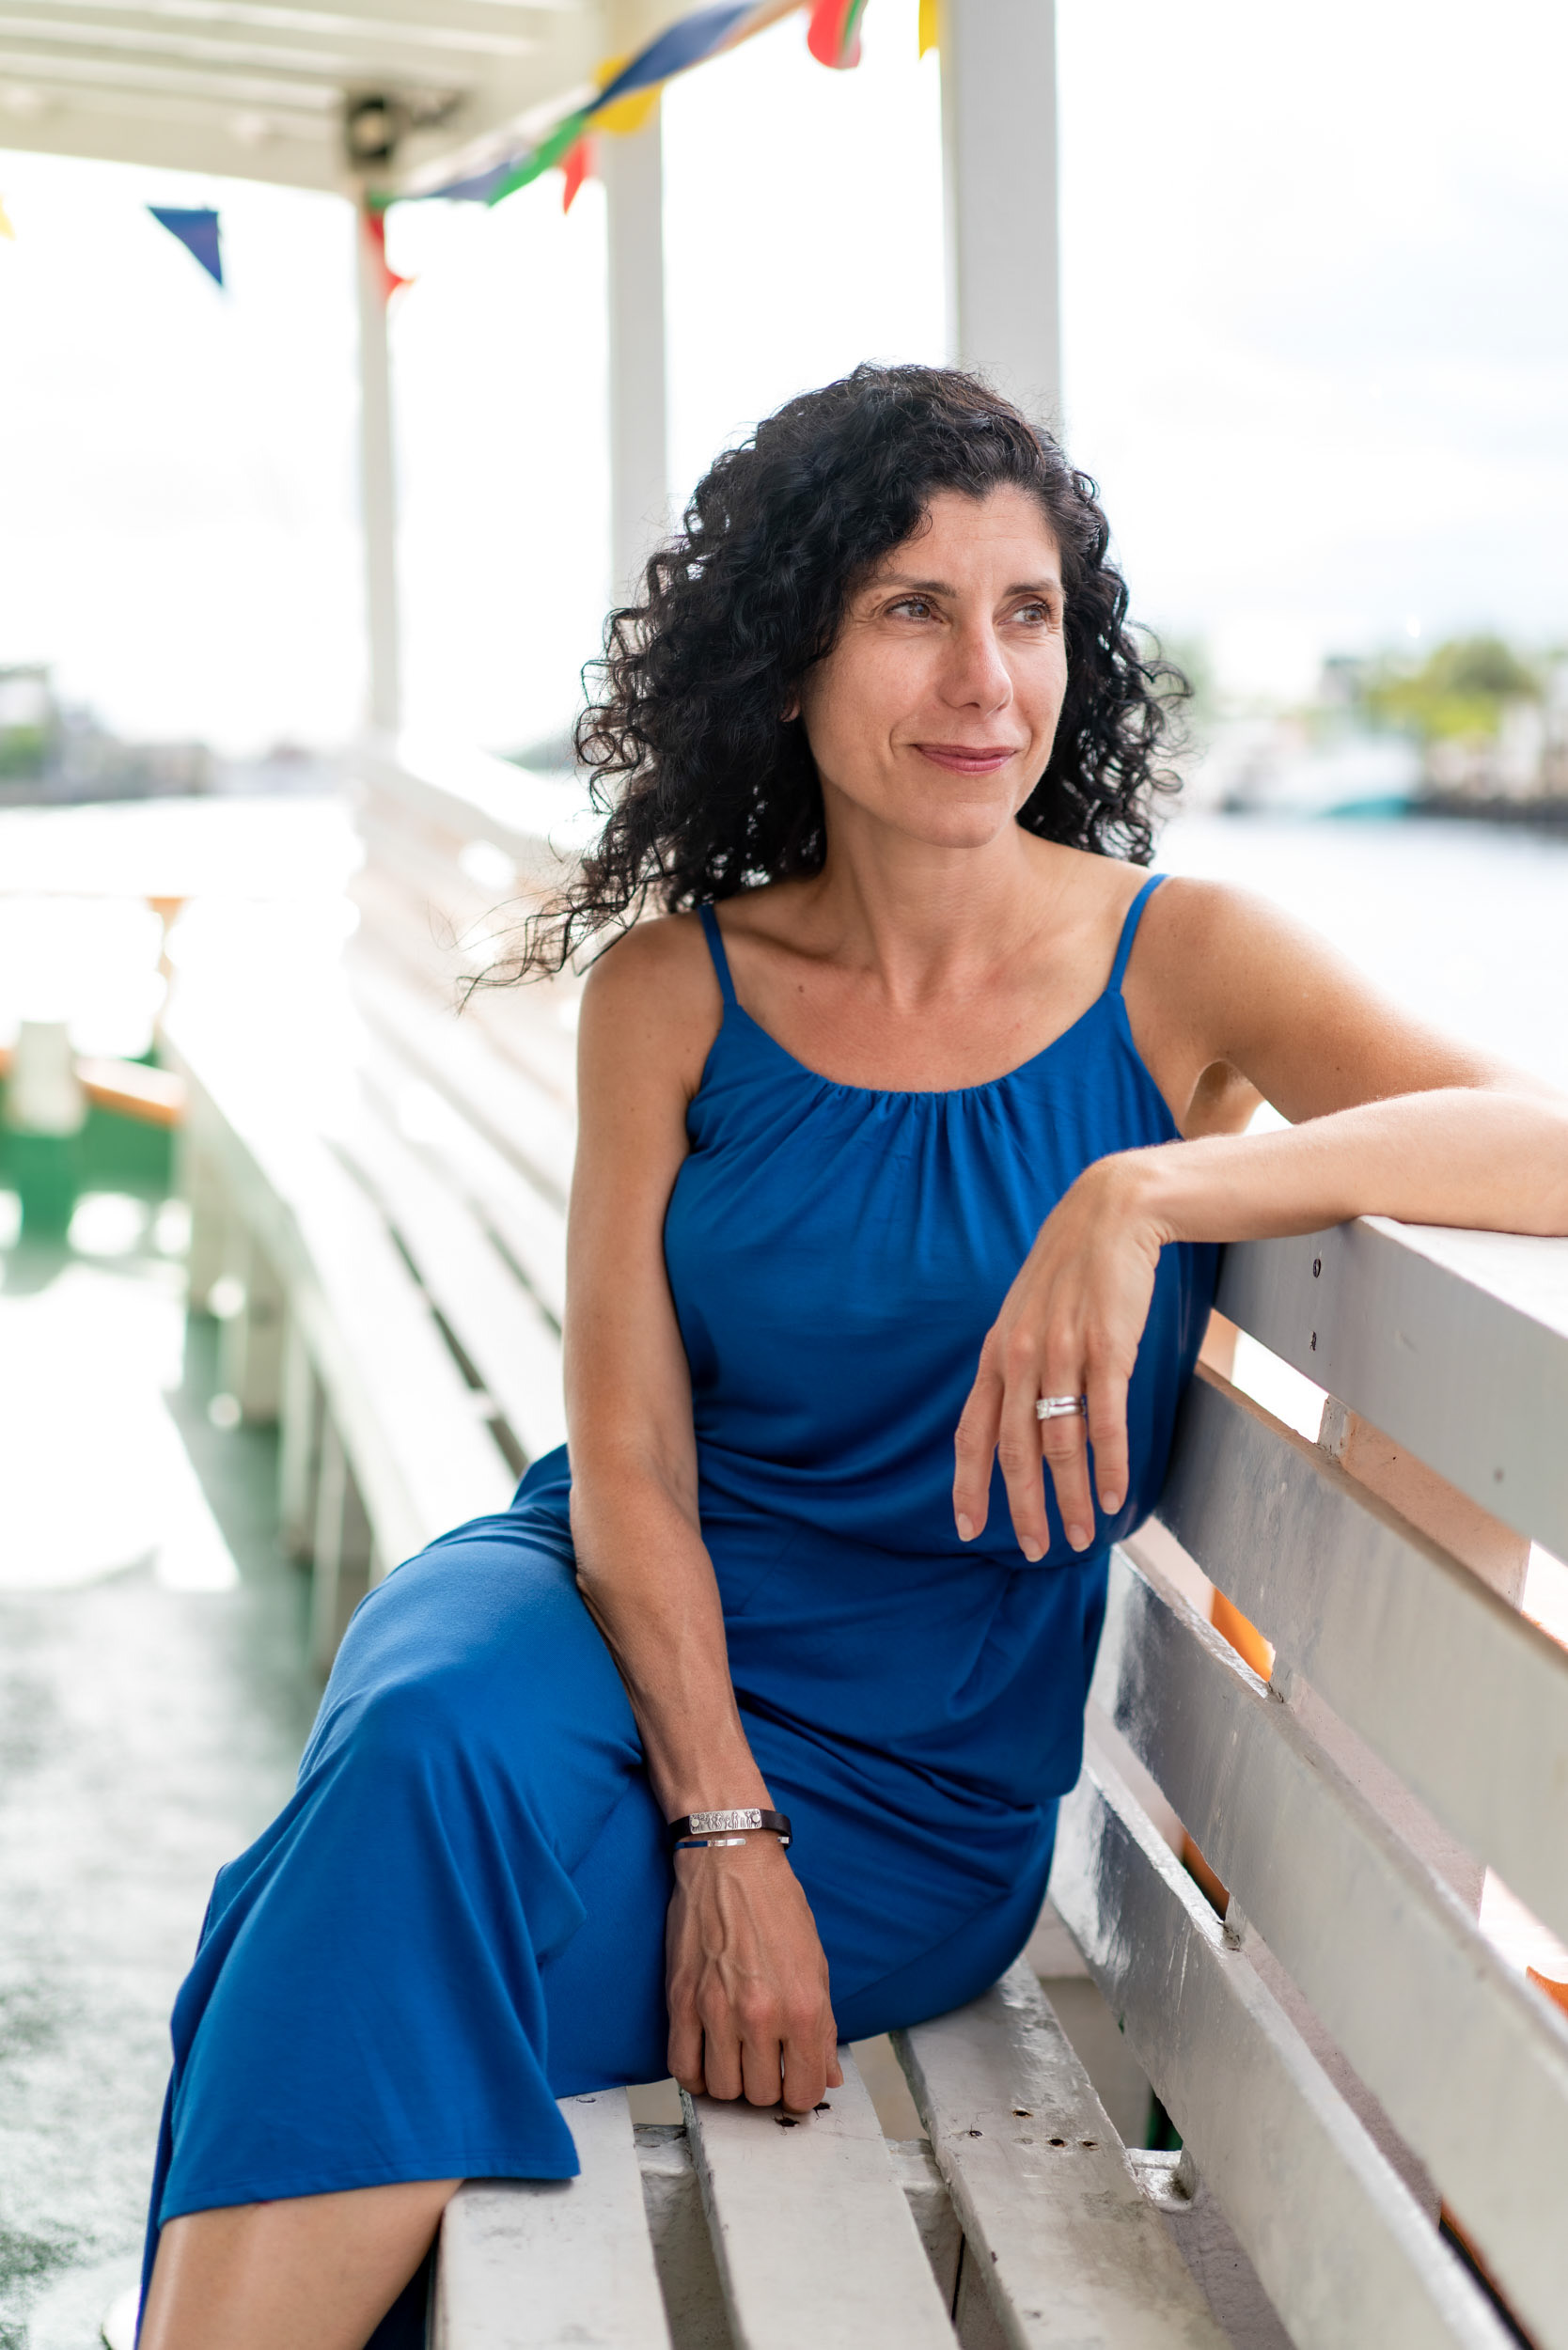 Portraits of Koula Kazista at the historic Sponge Docks in Tarpon Springs, FL June 30, 2019. Photographer: Chris Lake Assigning Editor: Caitlin DeFlaviis Model Release on File